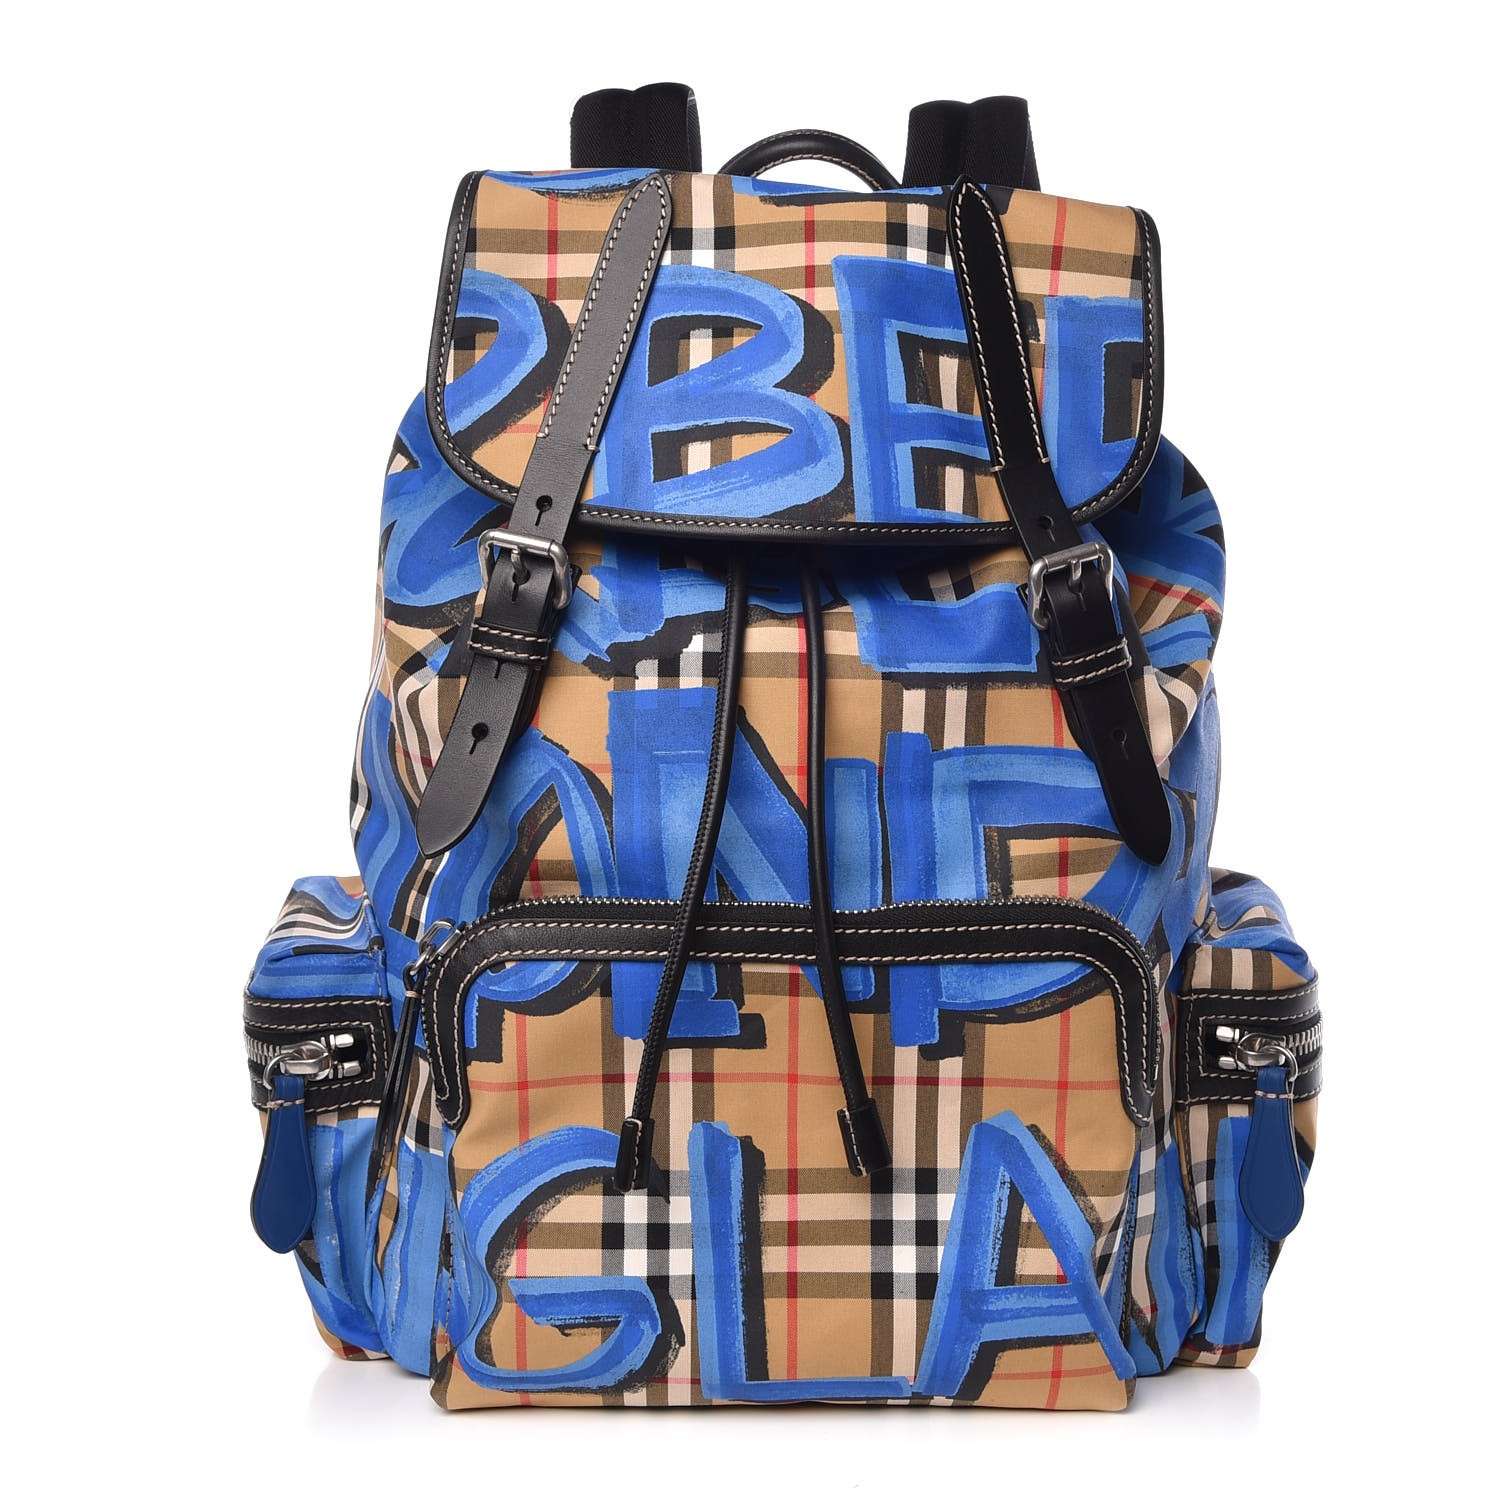 burberry backpack graffiti